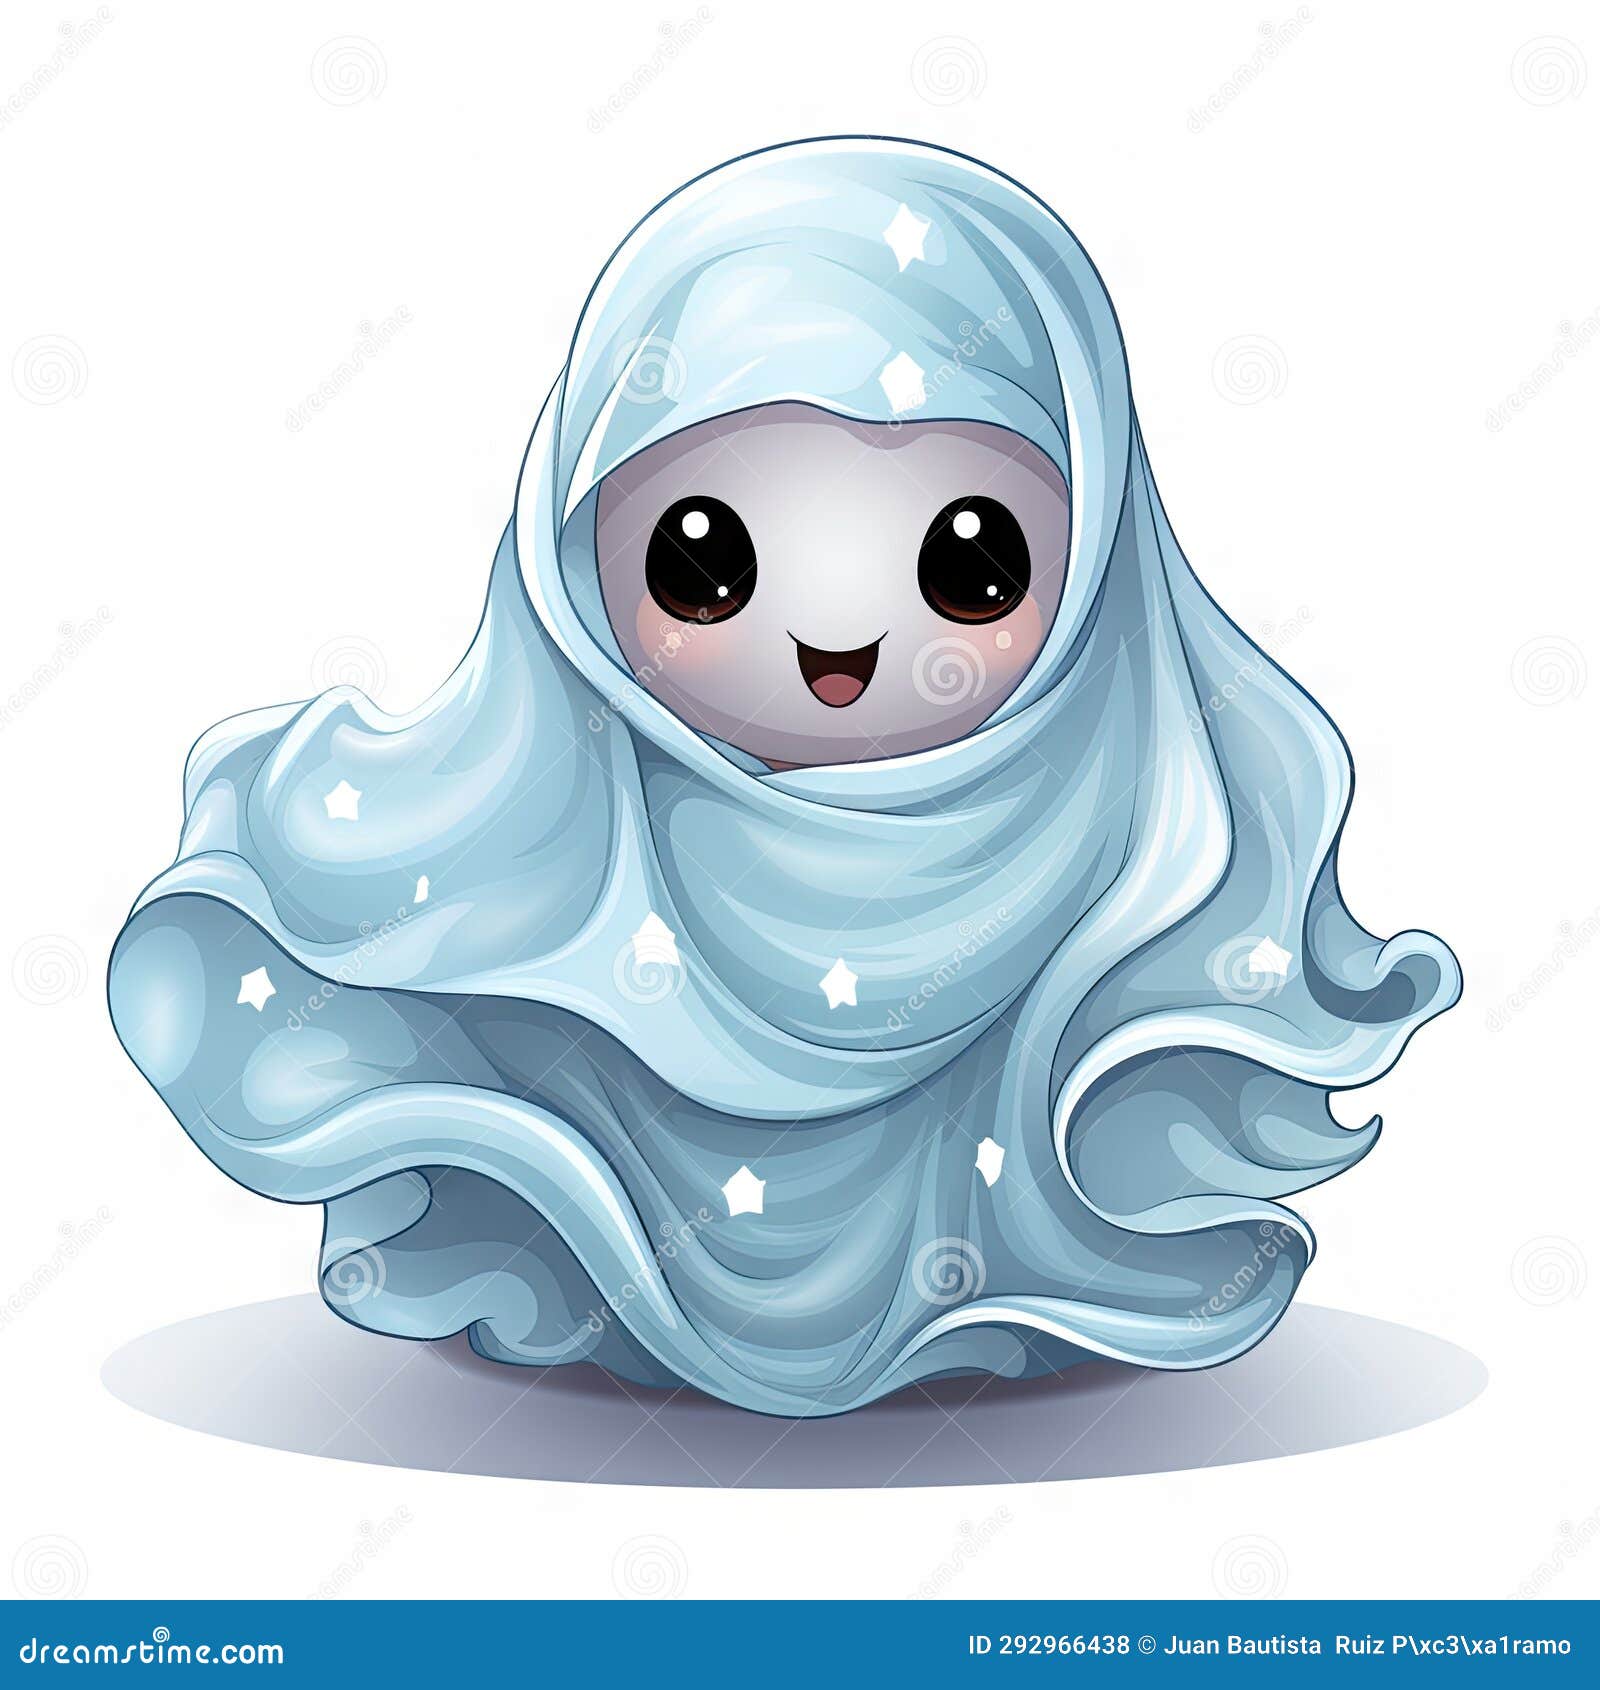 Cartoon Halloween Kawaii Ghost Character Holding Candies. Isolated